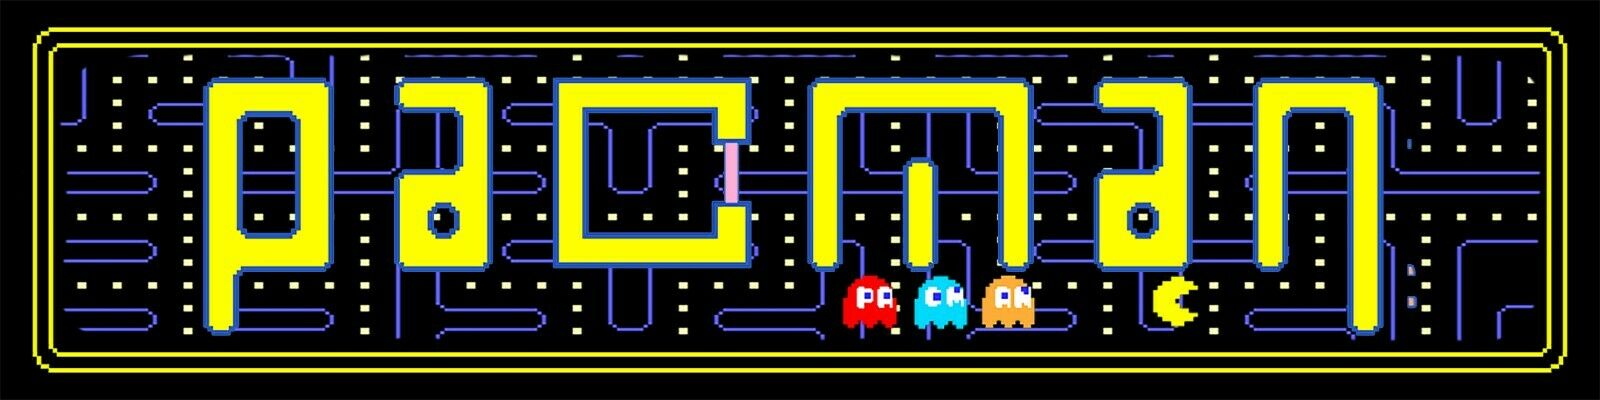 NEW Arcade Classic Pac Man Marquee Multicade Art Sticker 16